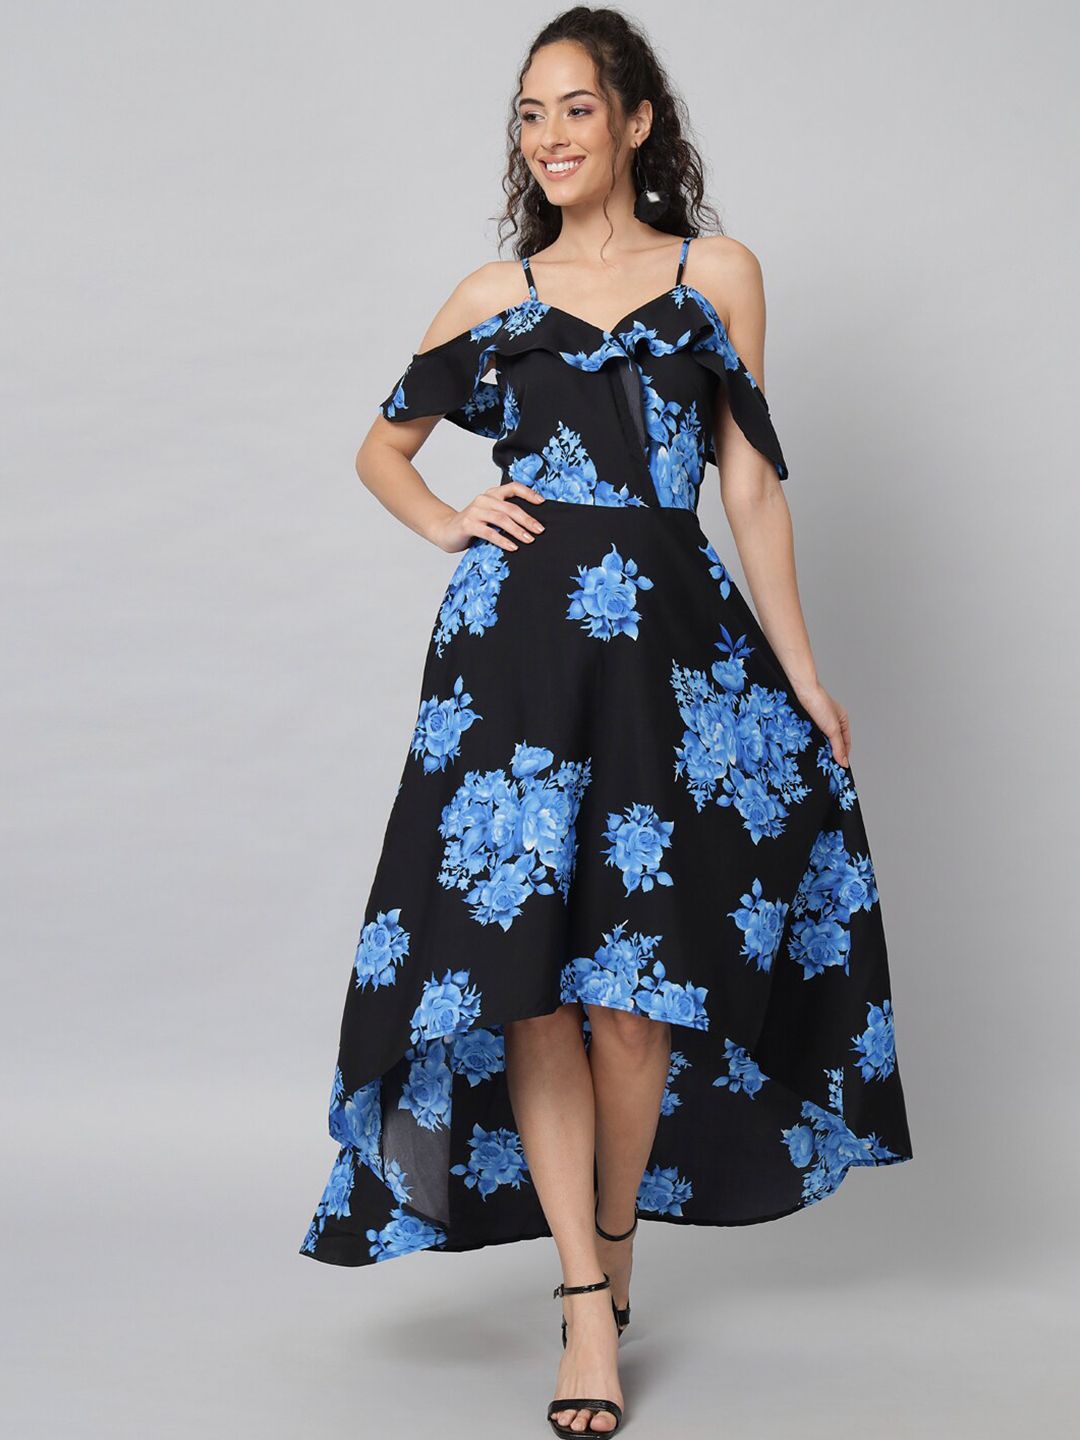 Emeros Black Floral Crepe Maxi Dress Price in India